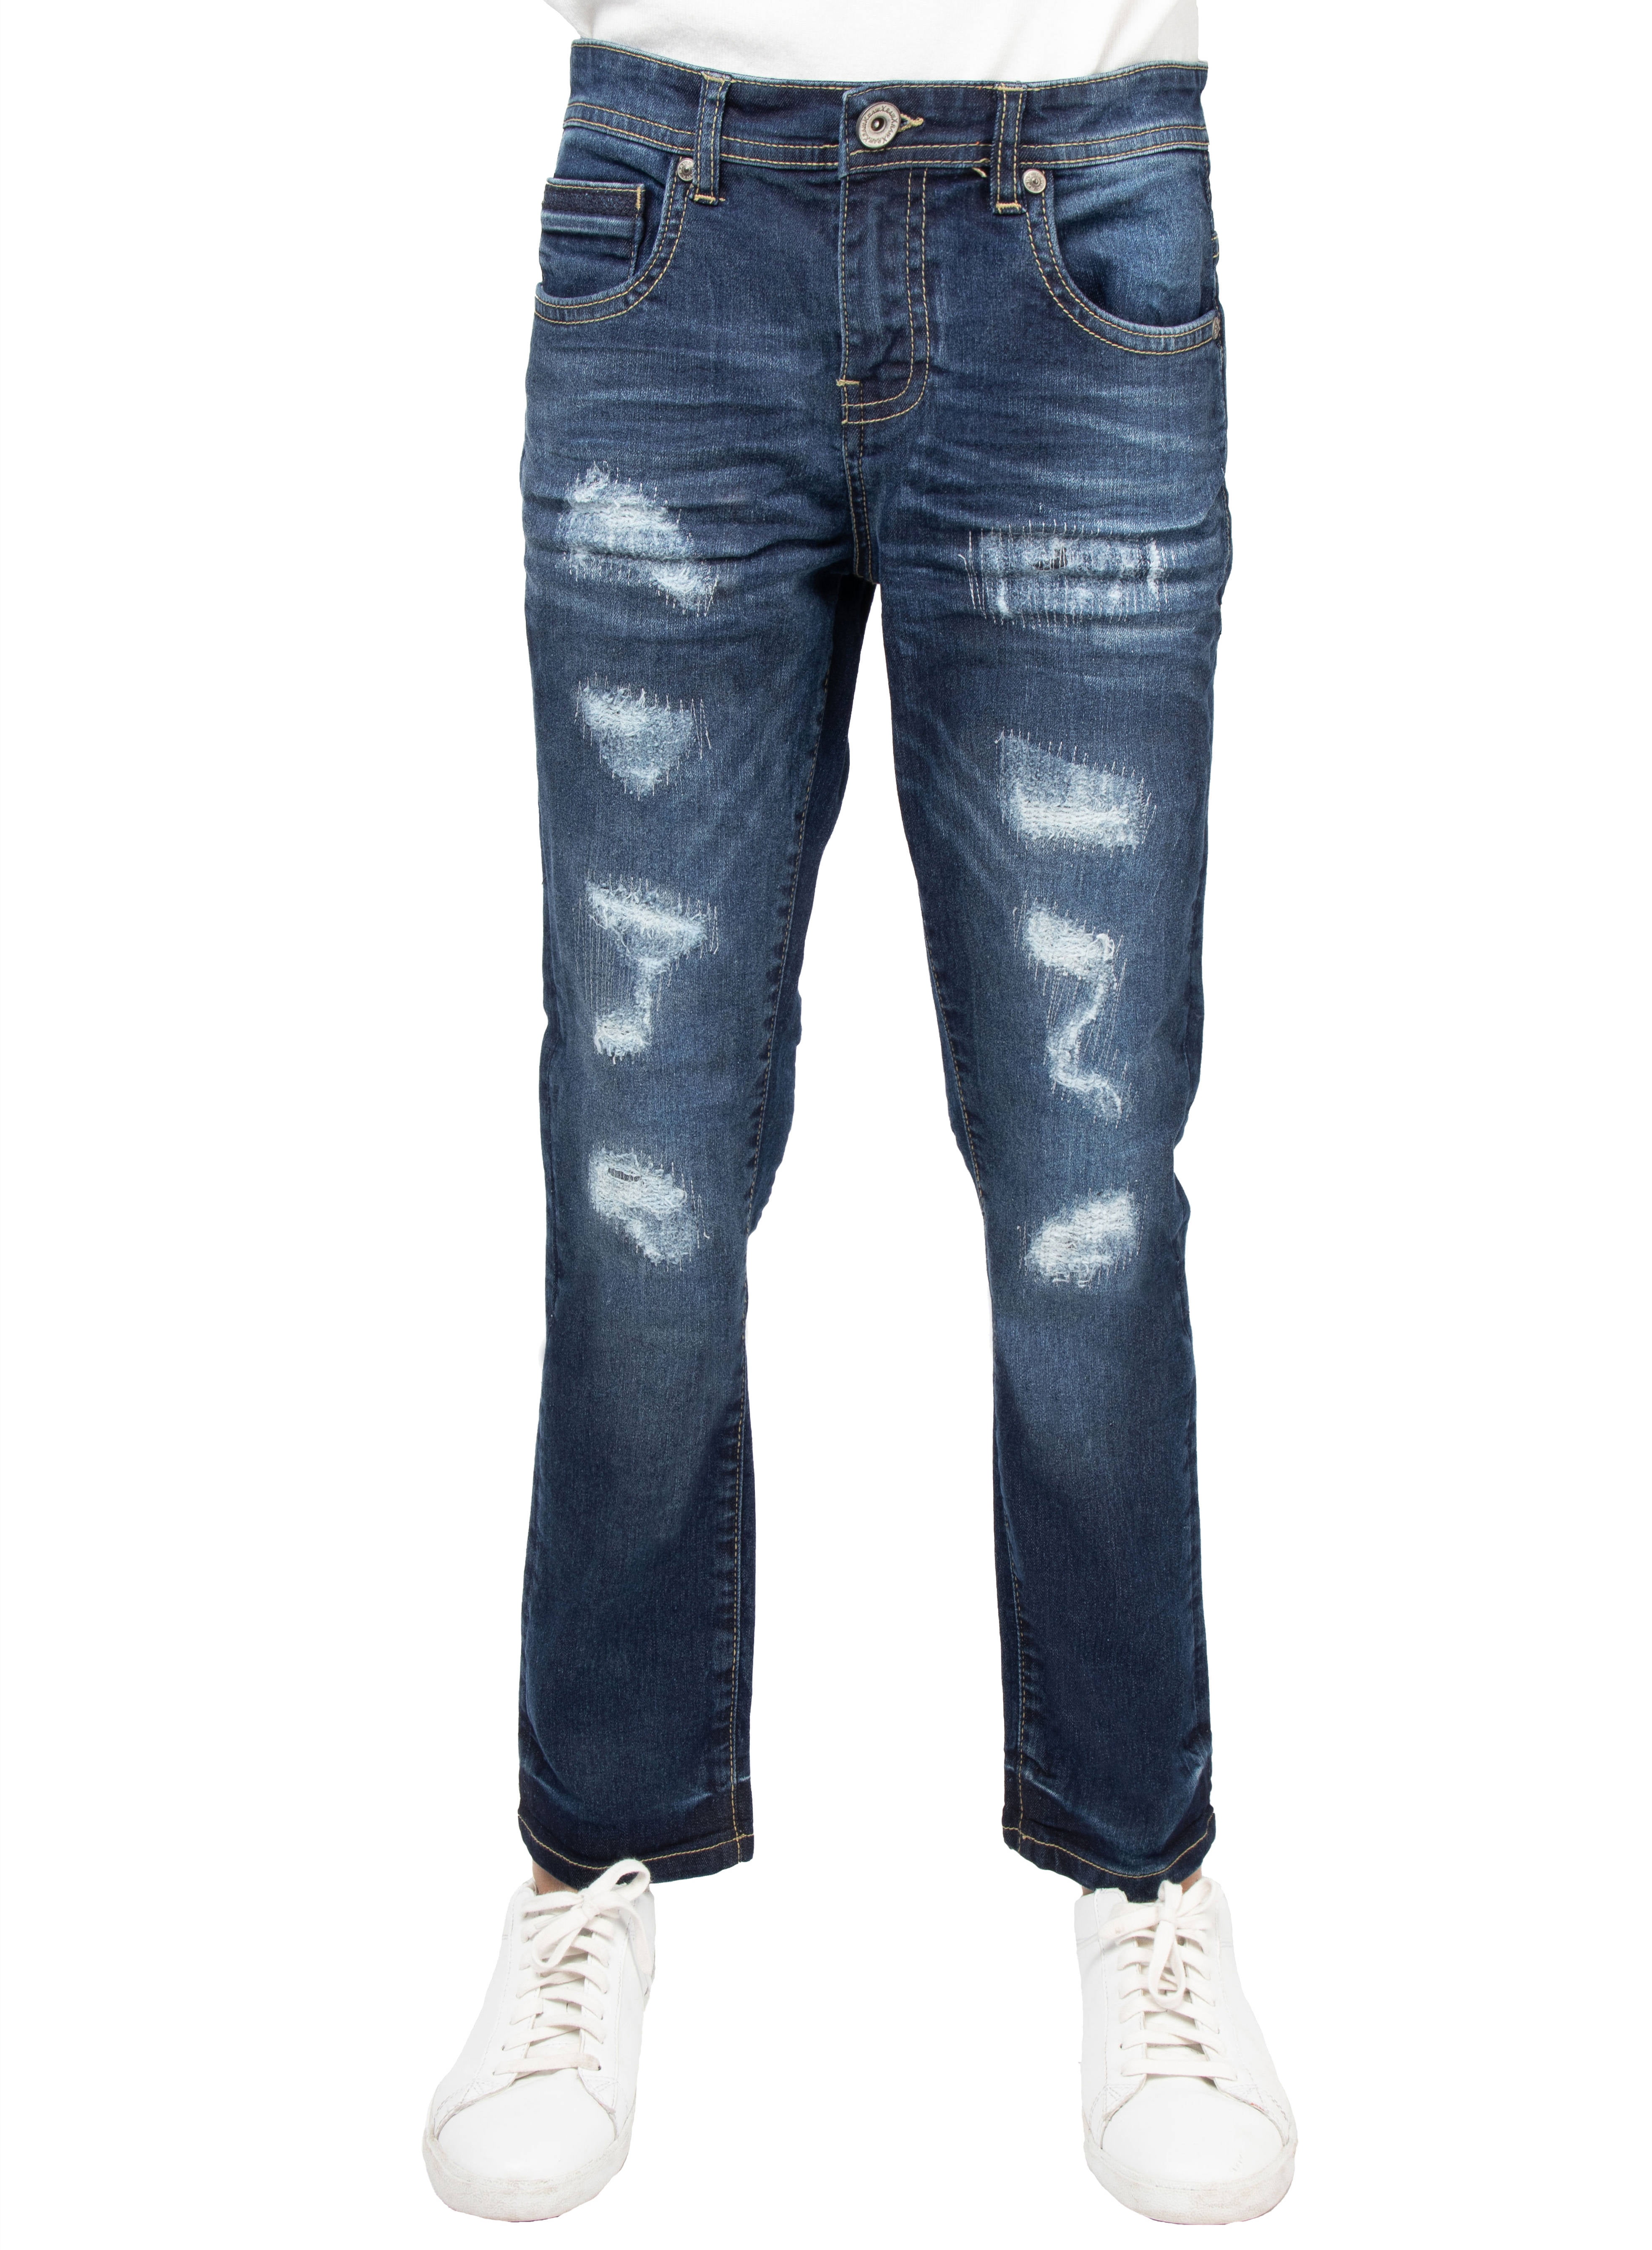 G Star Raw ARC 3D Loose Tapered Dark Wash Denim Jeans Size 30 x 34 | eBay